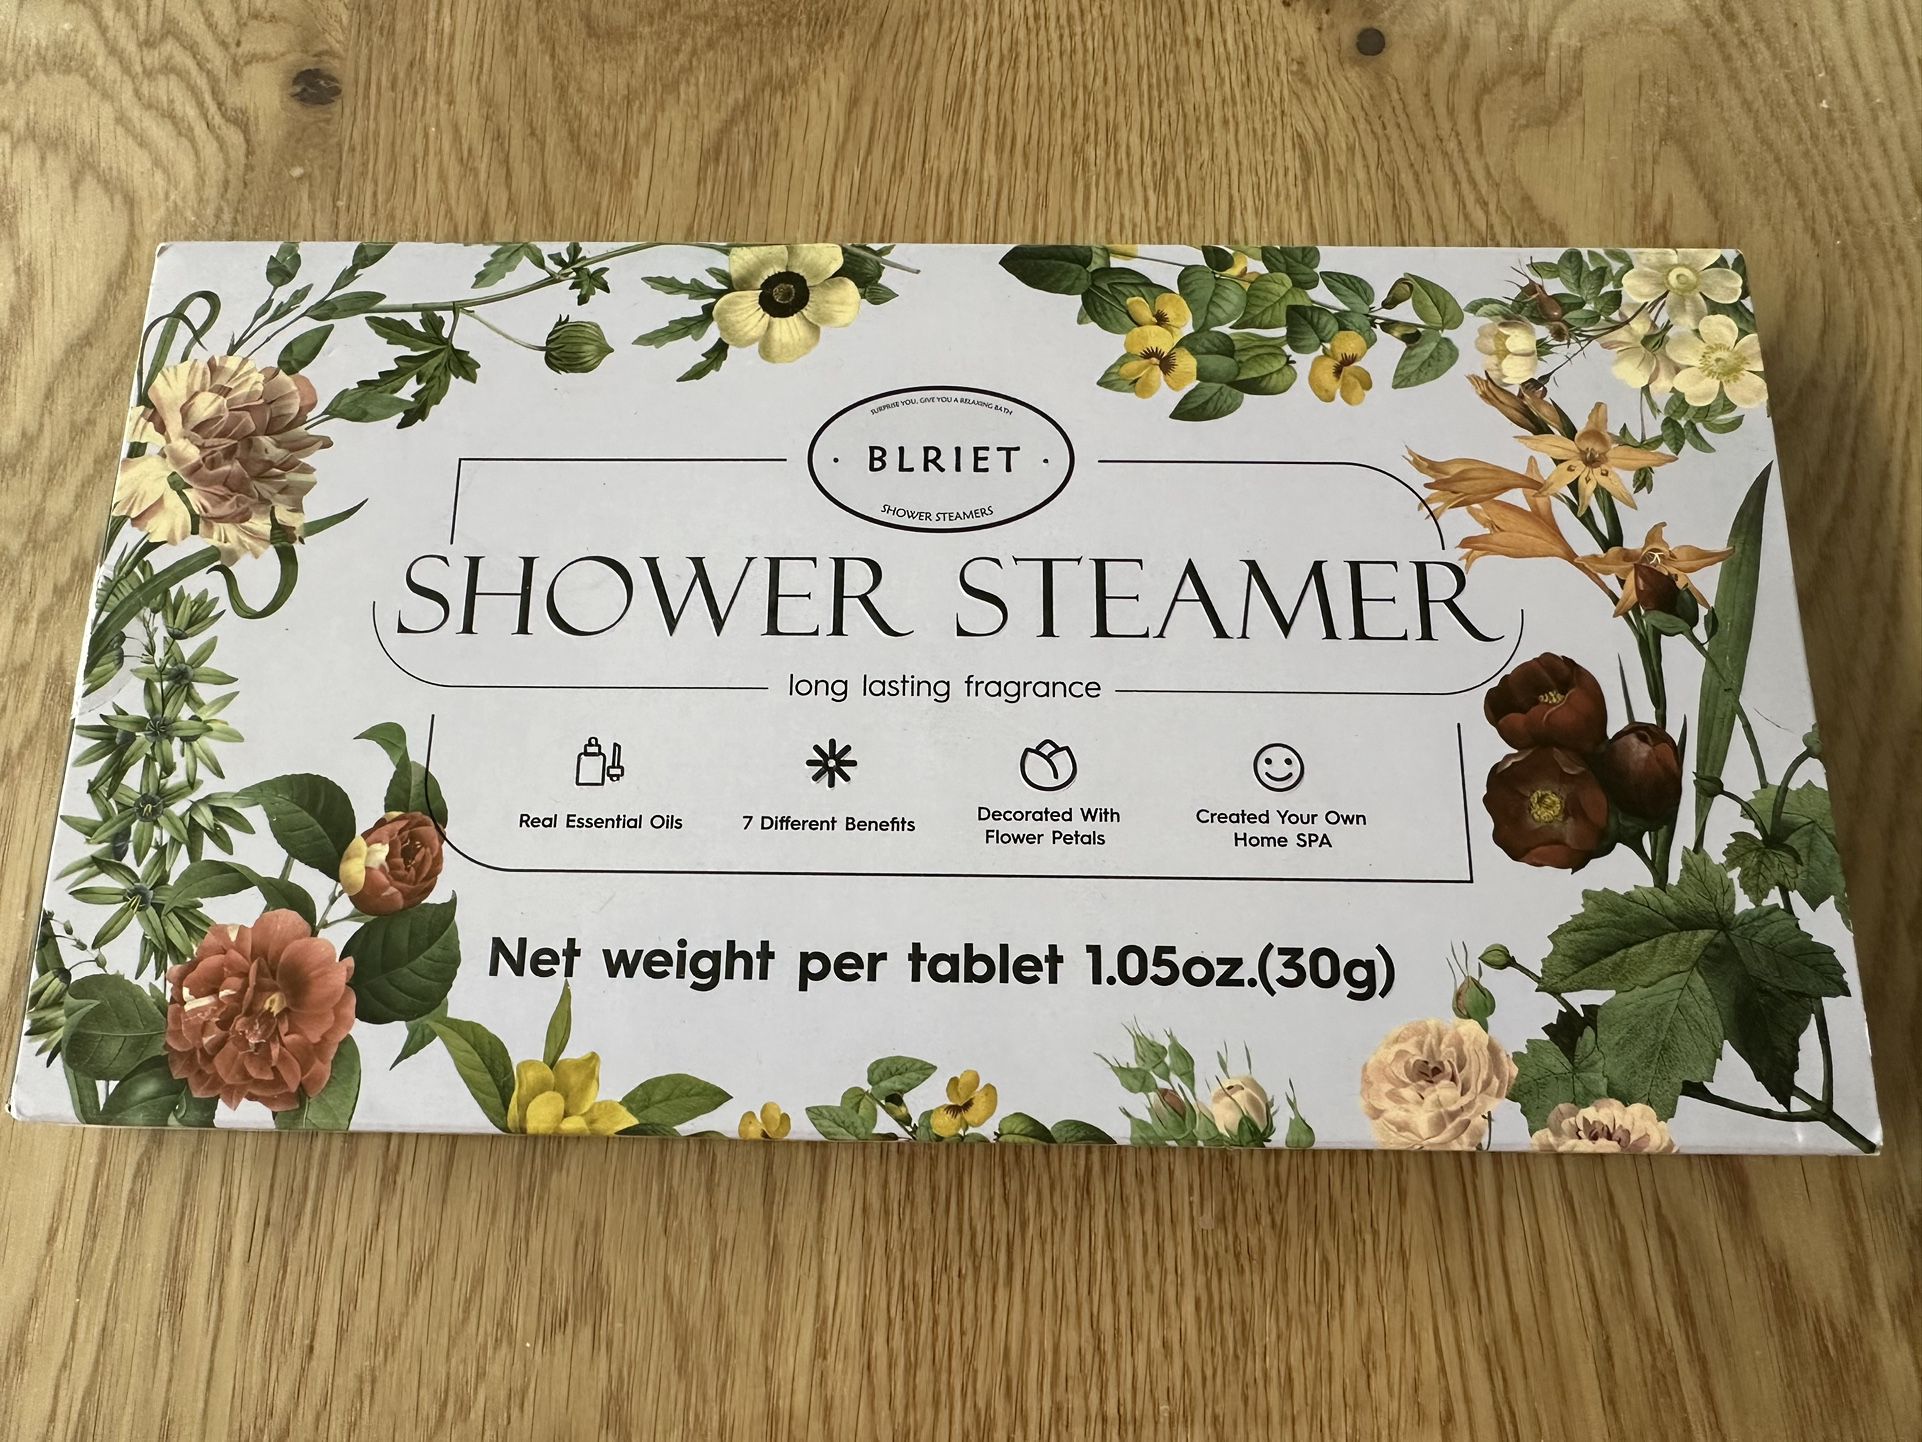 Shower Steamers 